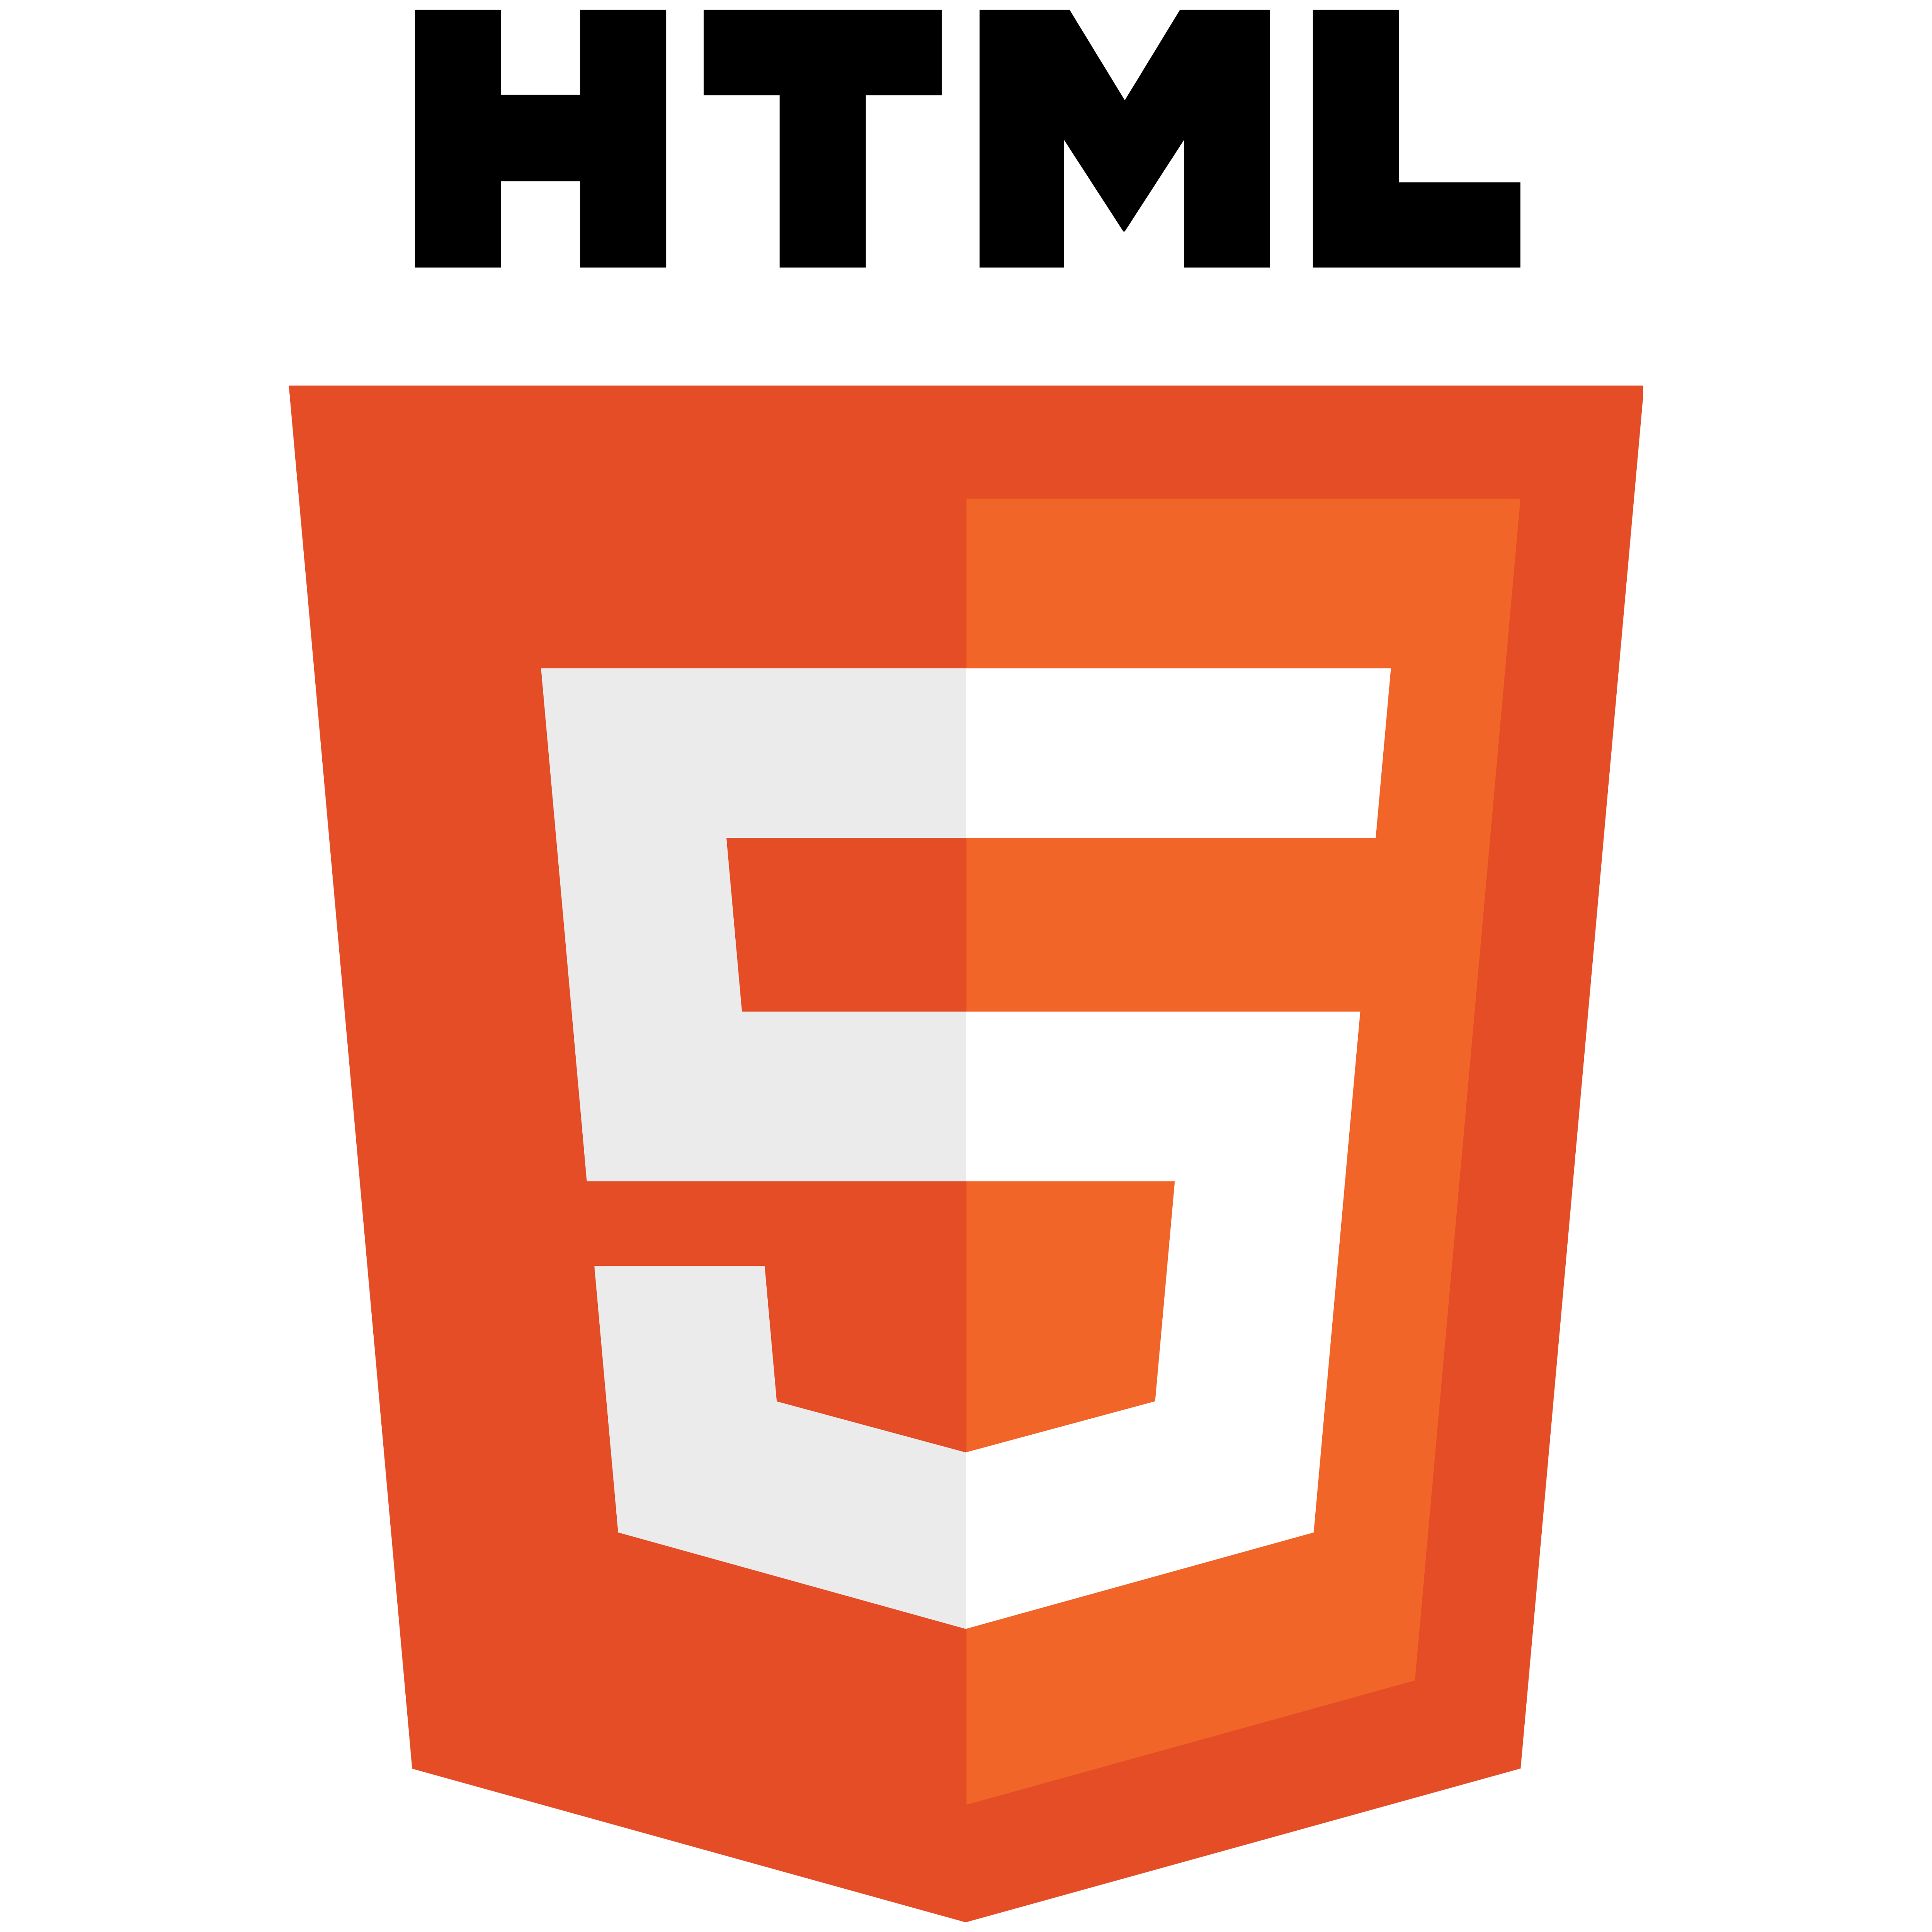 HTML Logo Transparent Image